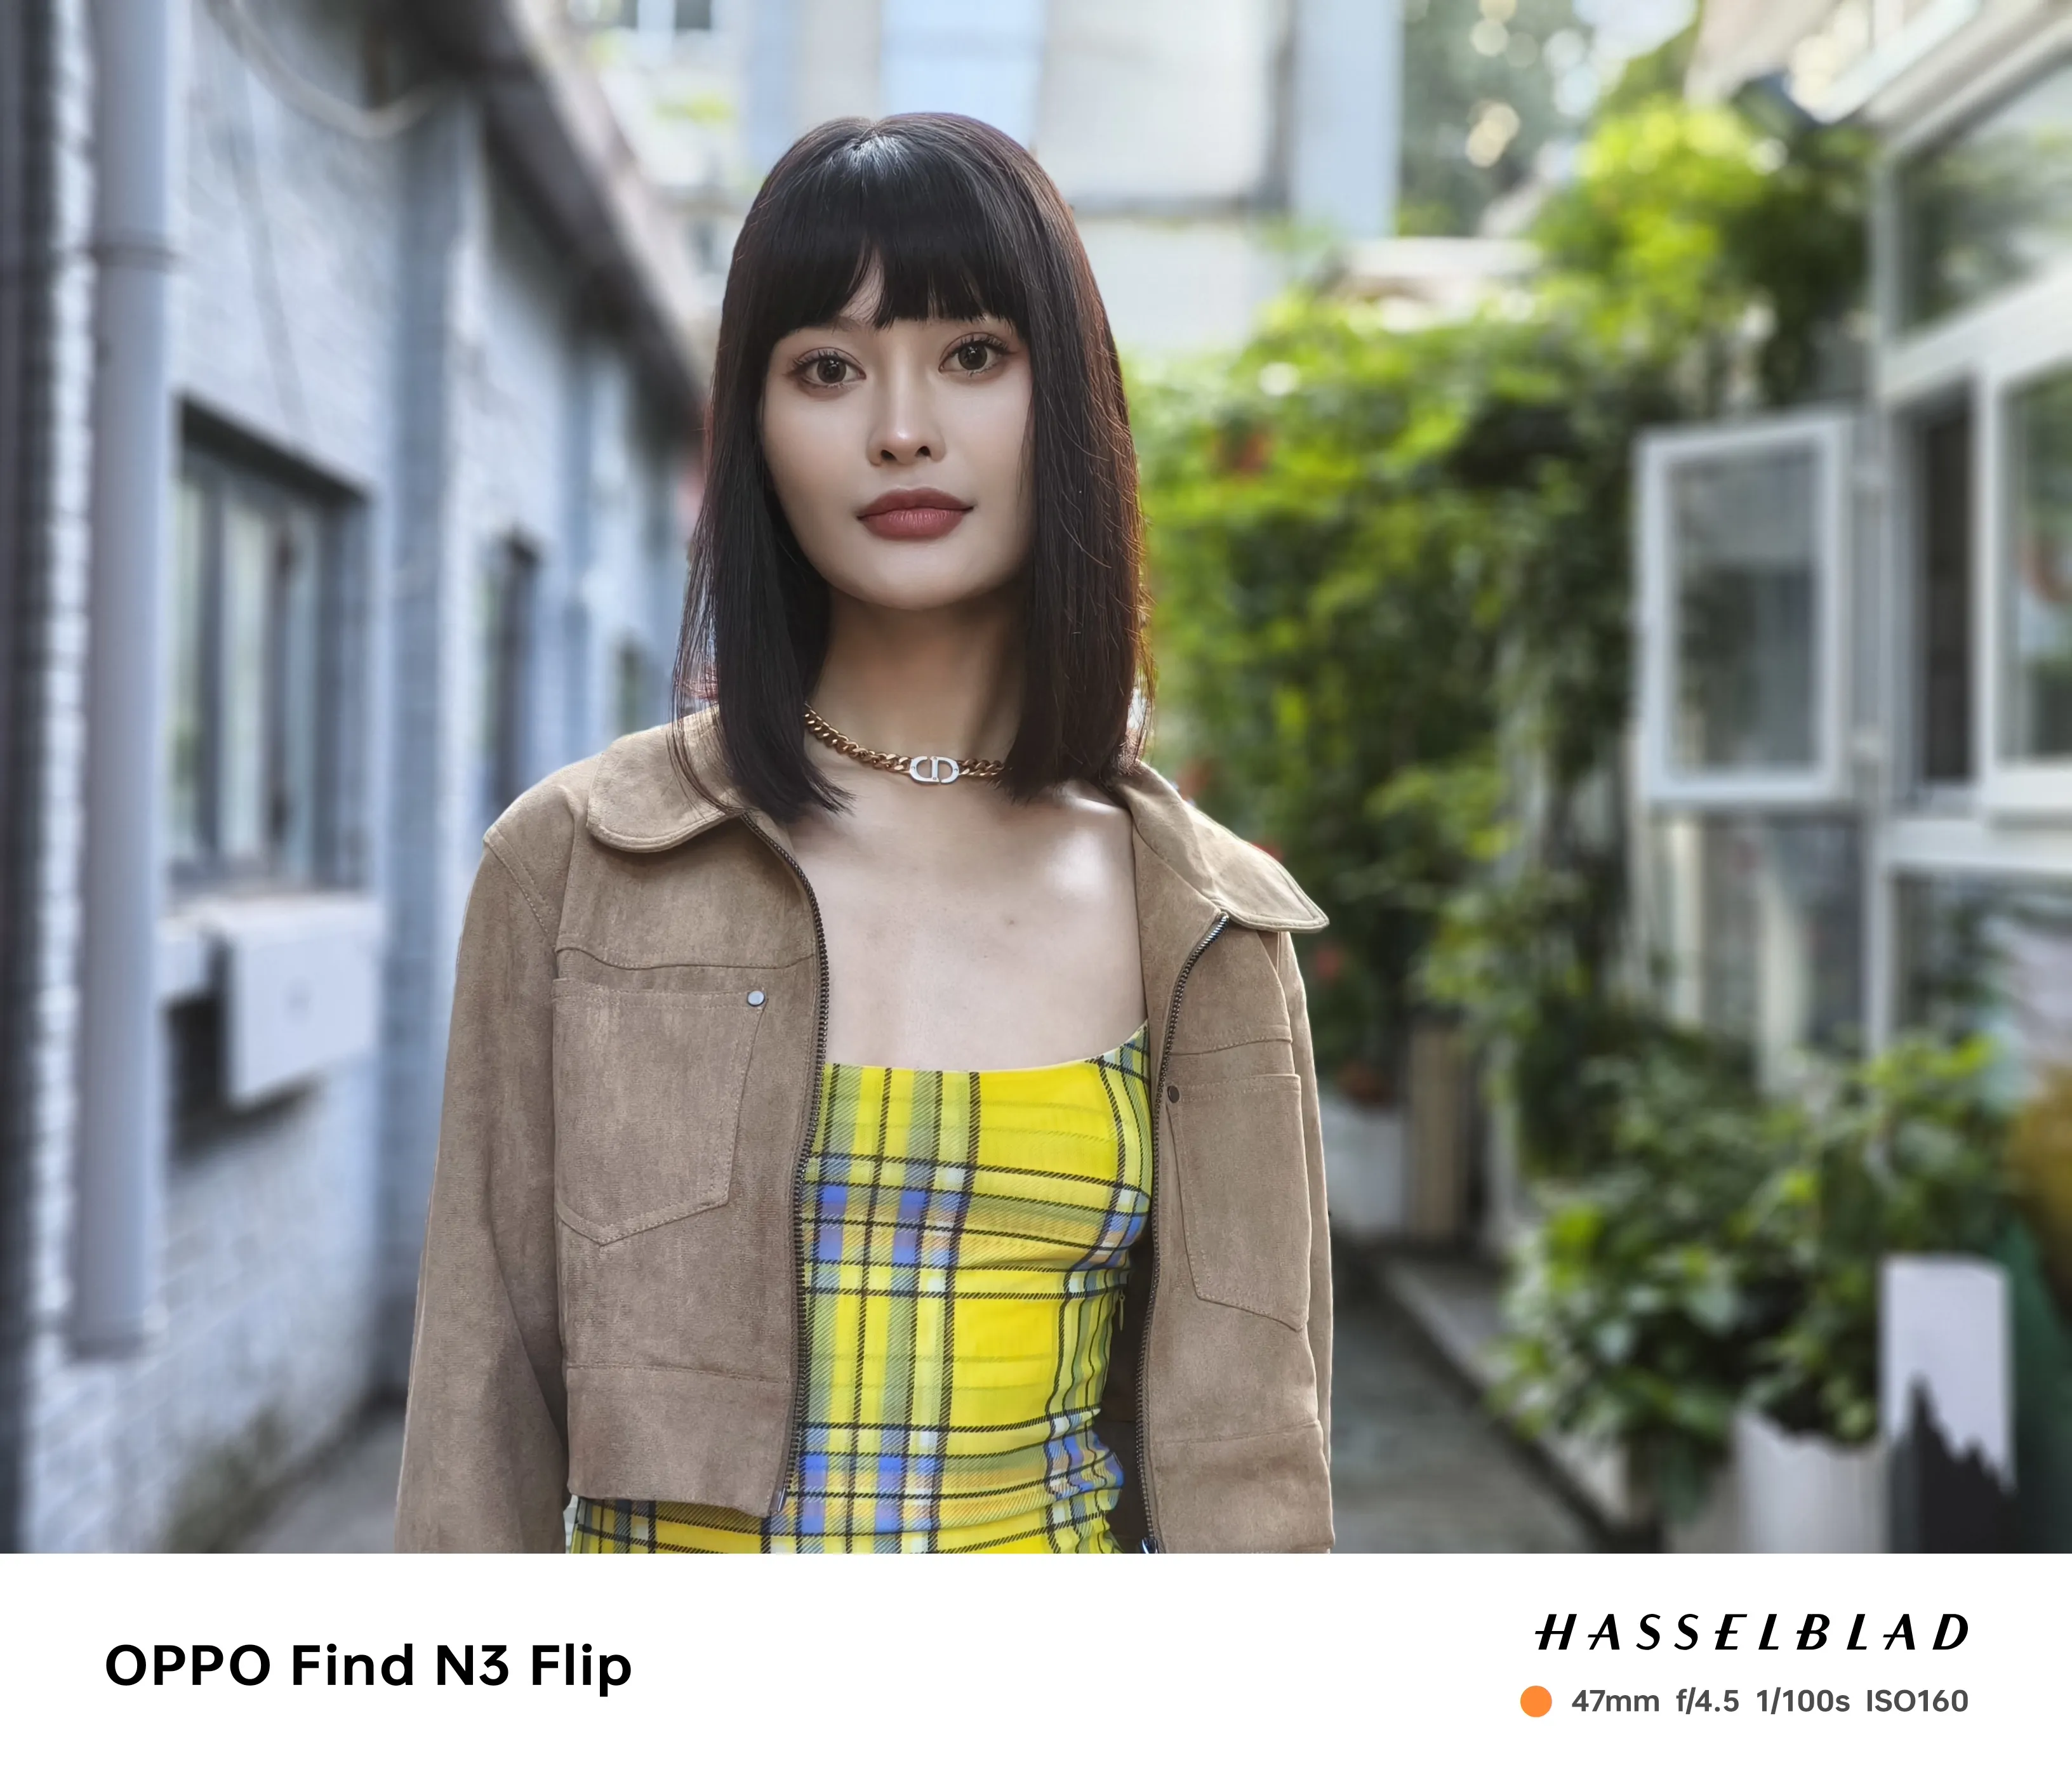 OPPO Hanapin N3 Flip review